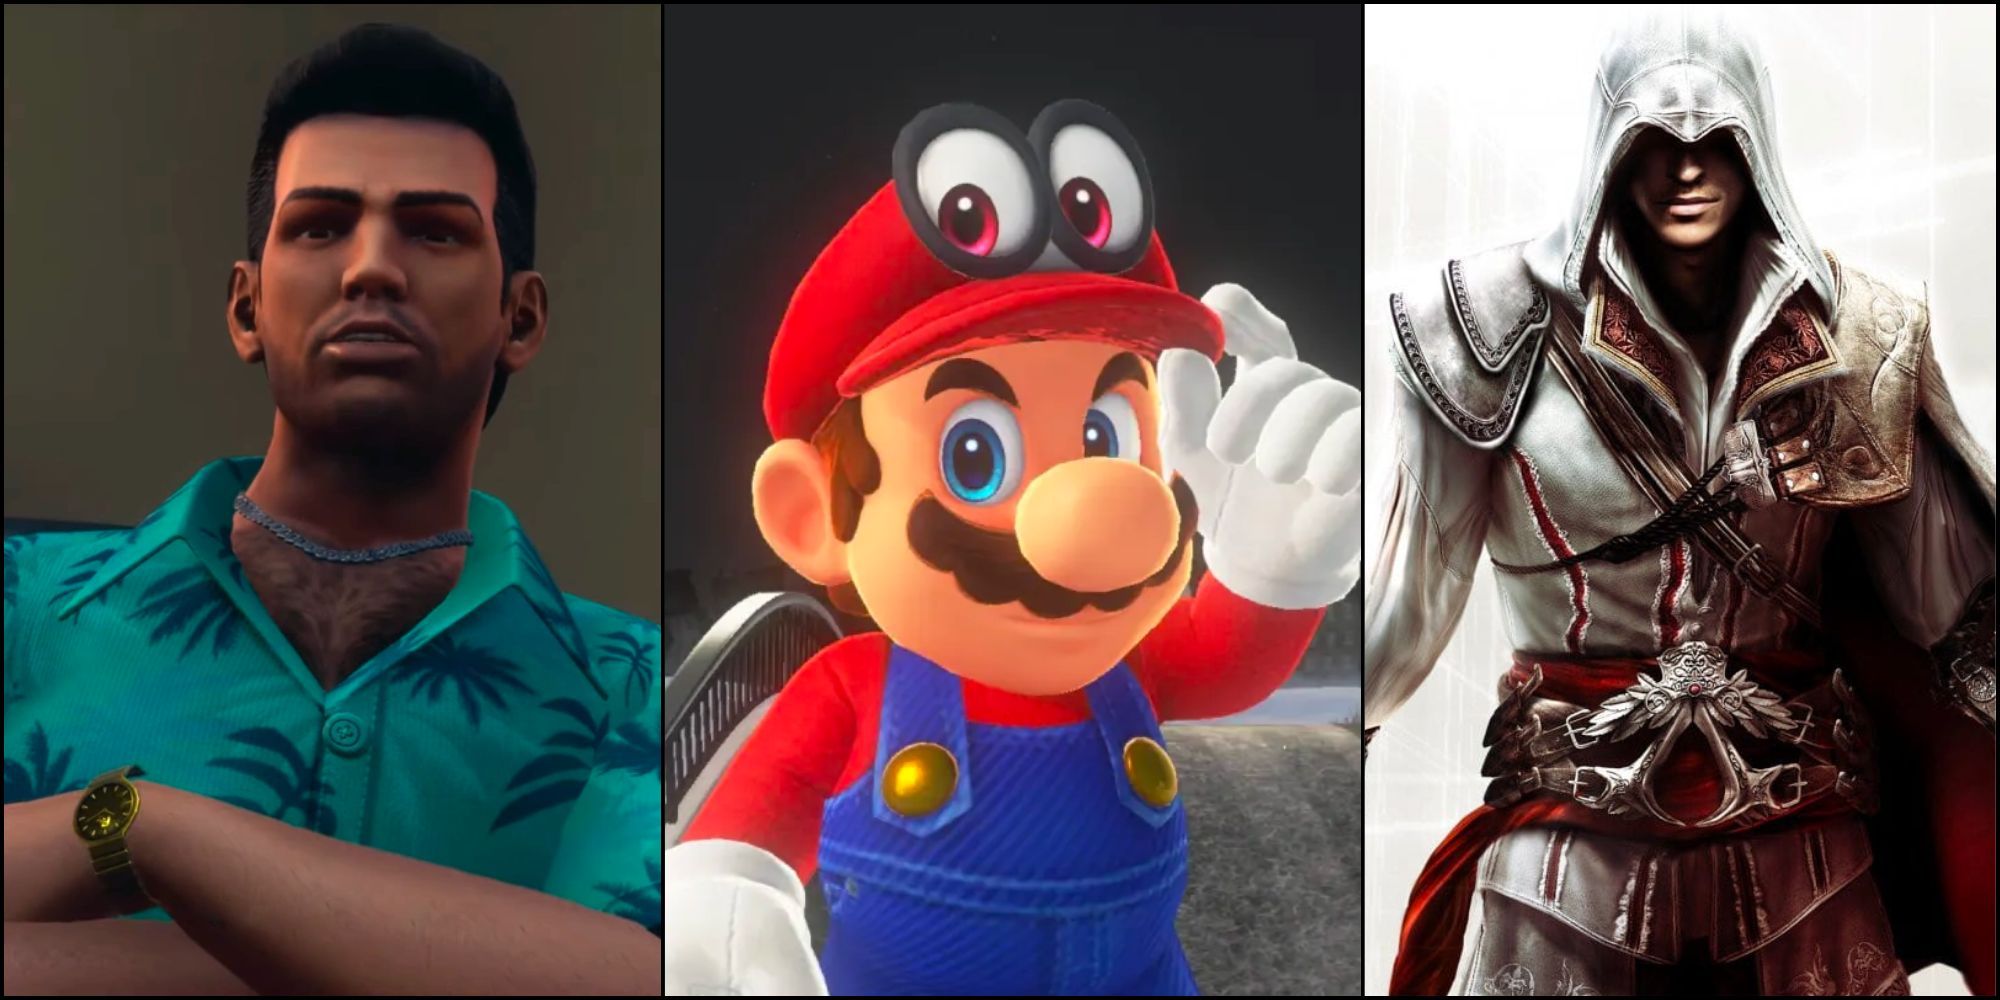 Tommy Vercetti, Mario, Ezio Auditore in Split Image Collage